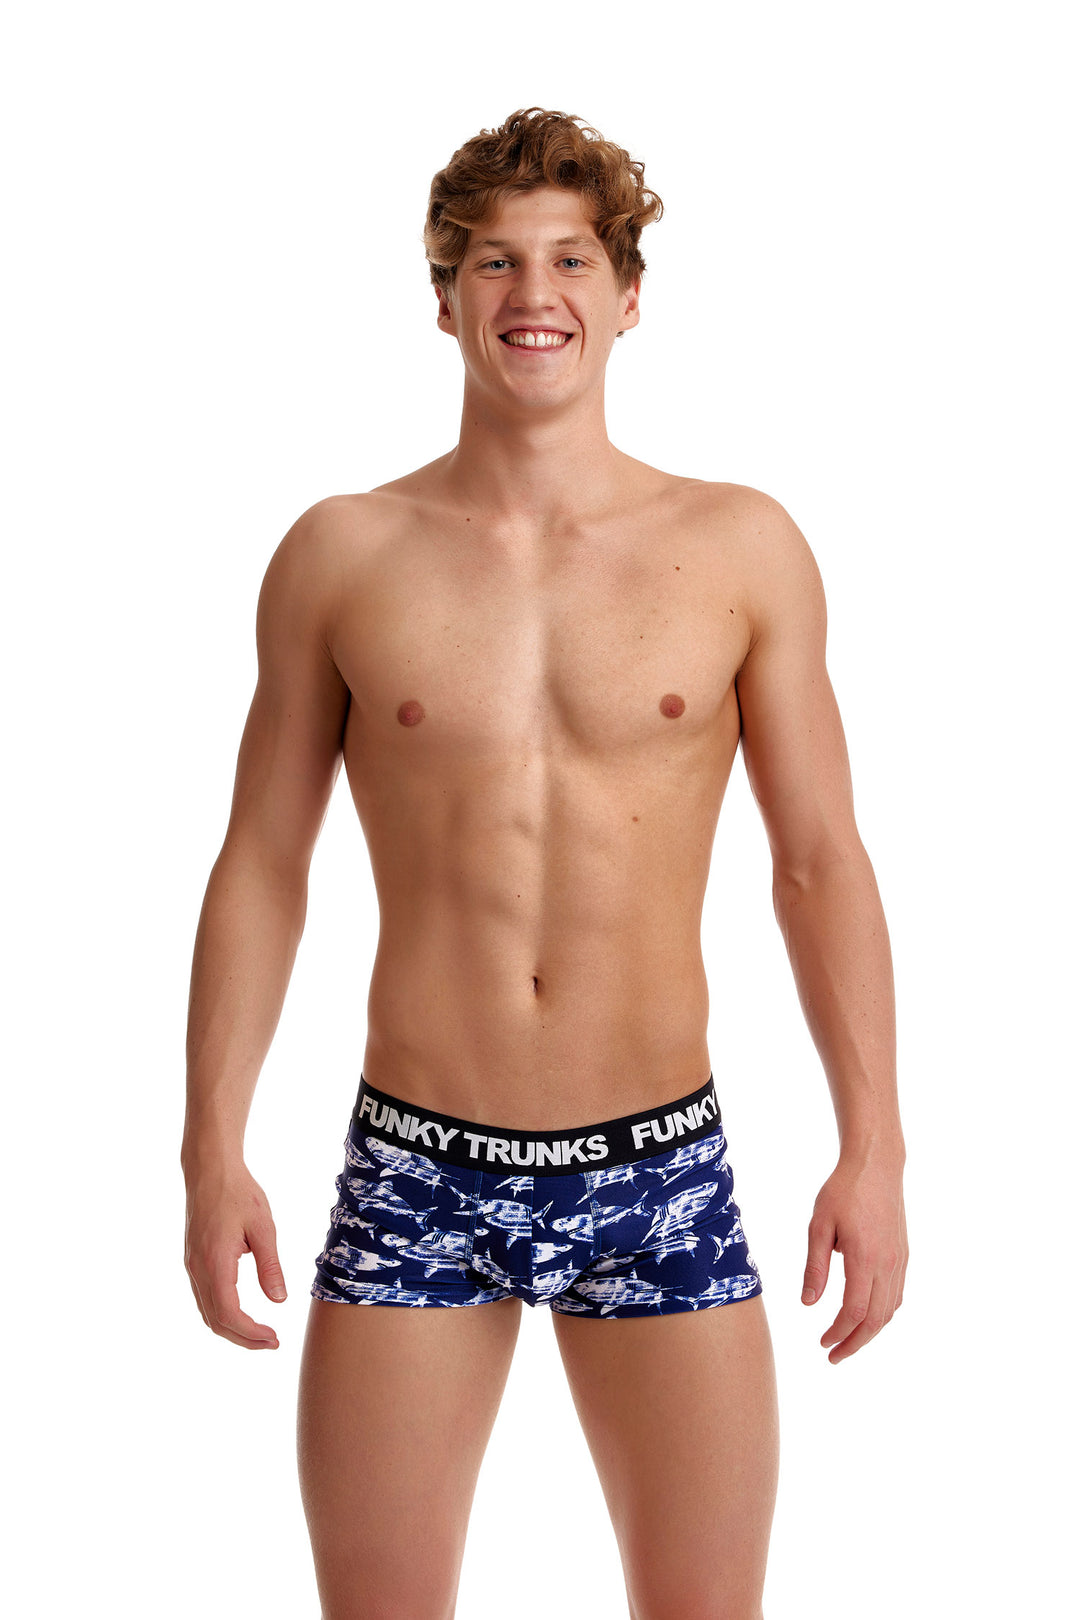 Rompa Chompa Underwear Underwear FT50M - Men